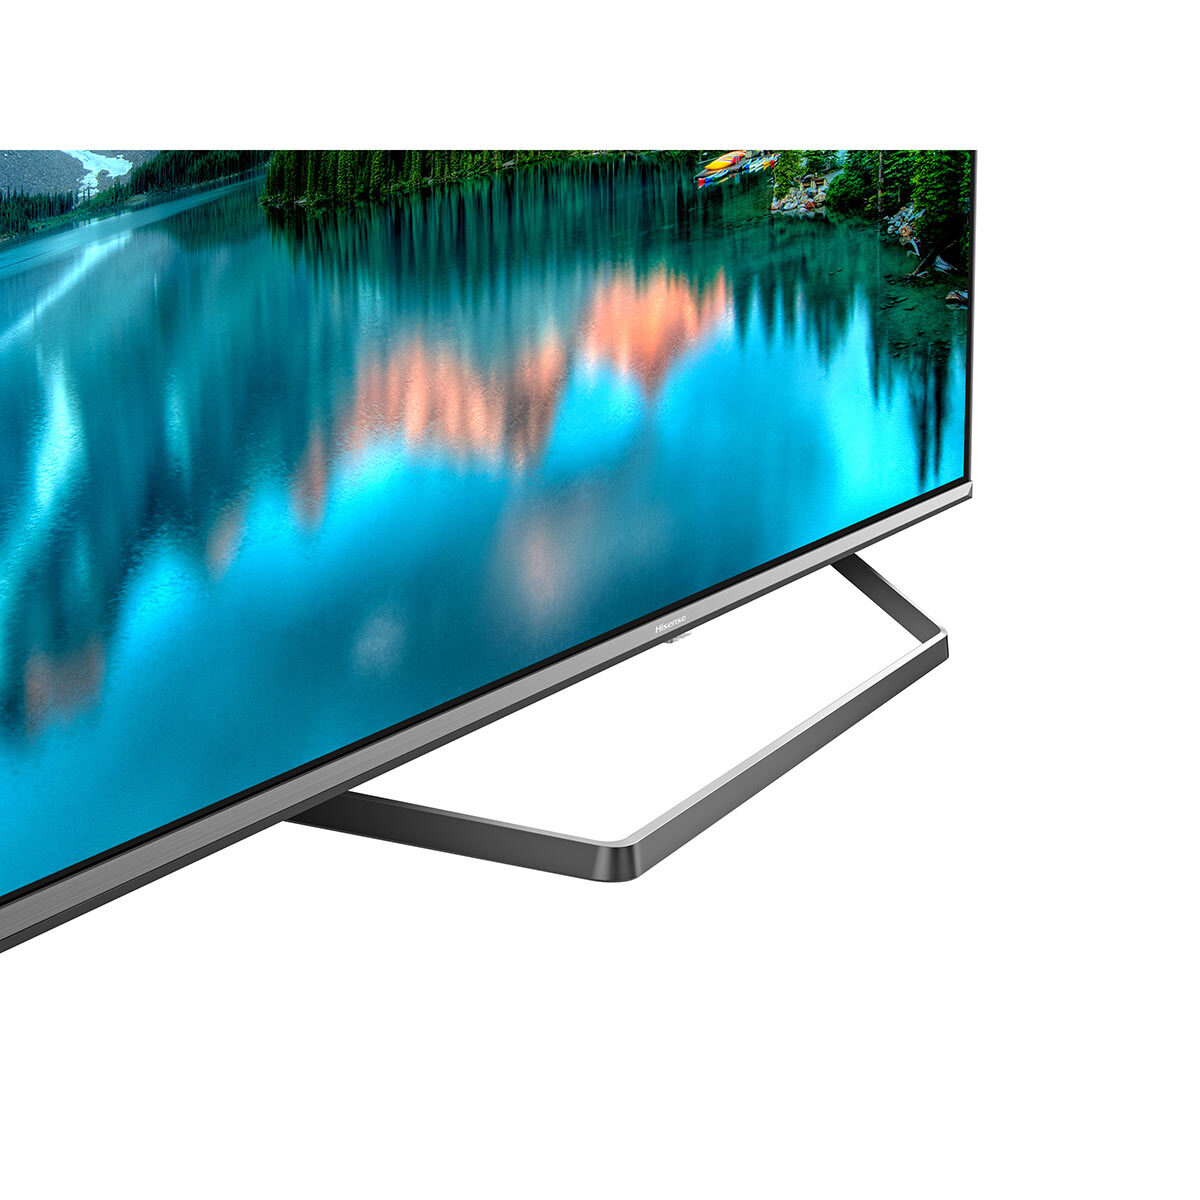 Buy Hisense 43A7100FTUK 43 Inch 4K Ultra HD Smart TV at costco.co.uk